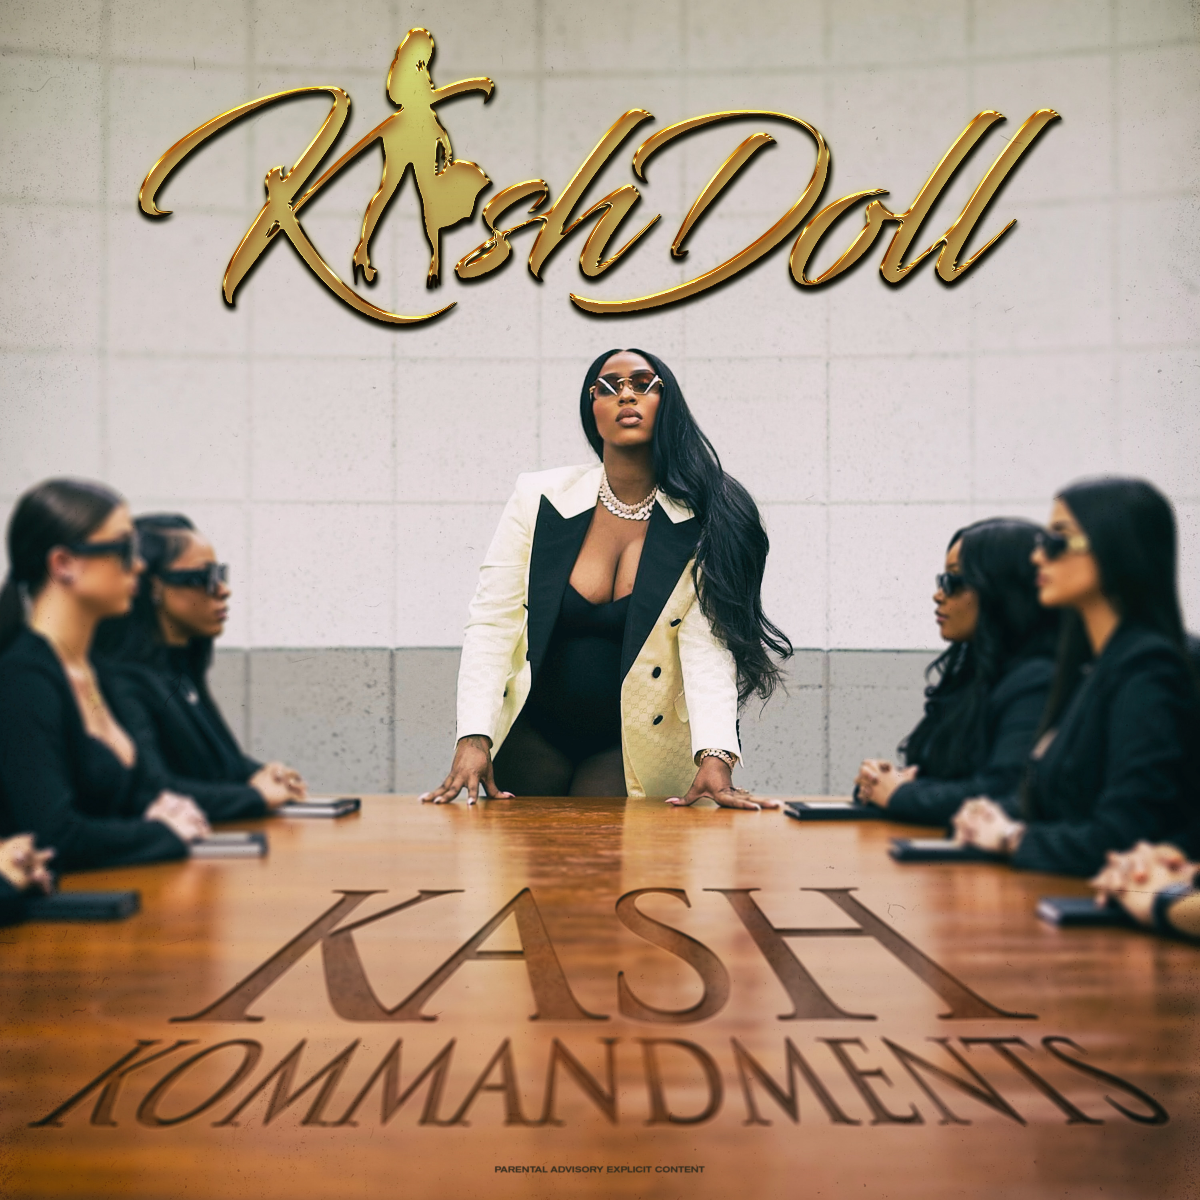 Kash Doll Drops a Few Lessons with “Kash Kommandments”